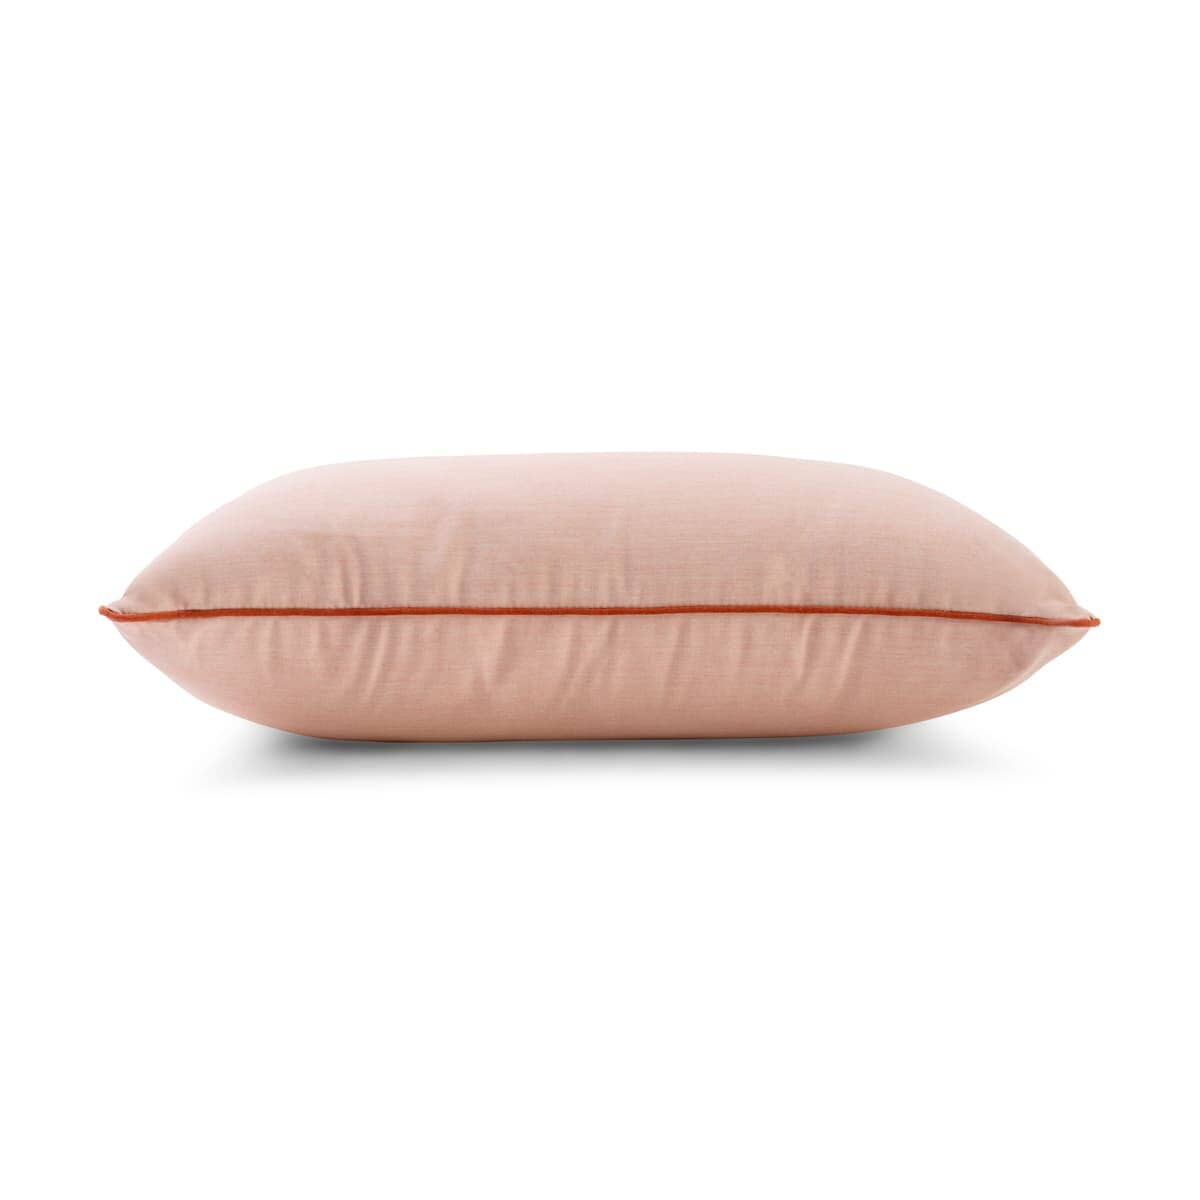 Studio image of riviera pink throw pillow